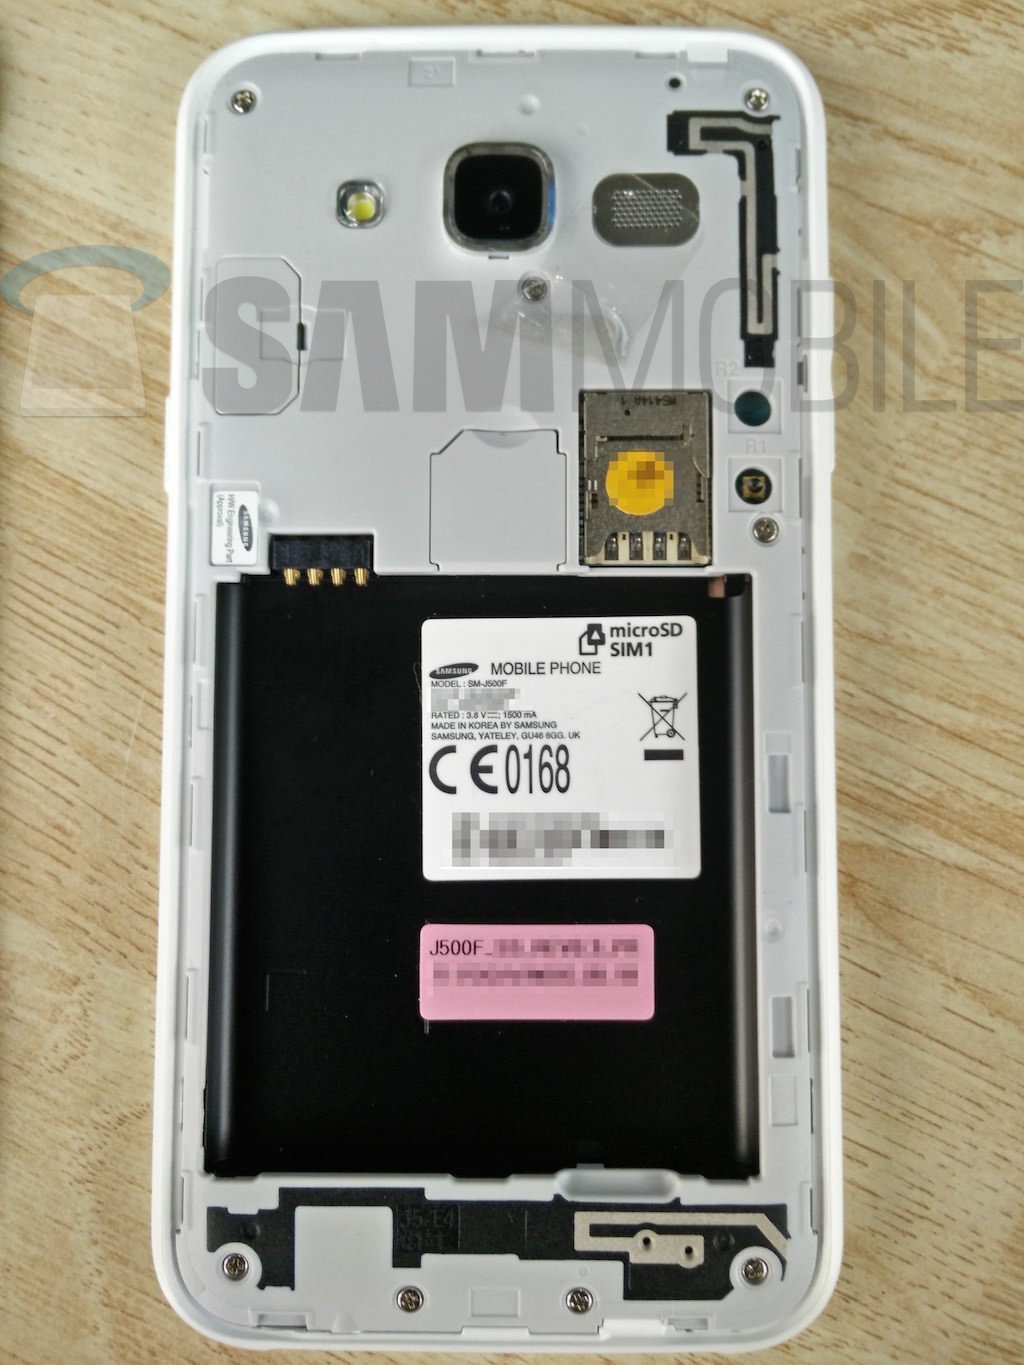 cartel Alegaciones leninismo Exclusive: Samsung Galaxy J5 live images and specifications - SamMobile -  SamMobile